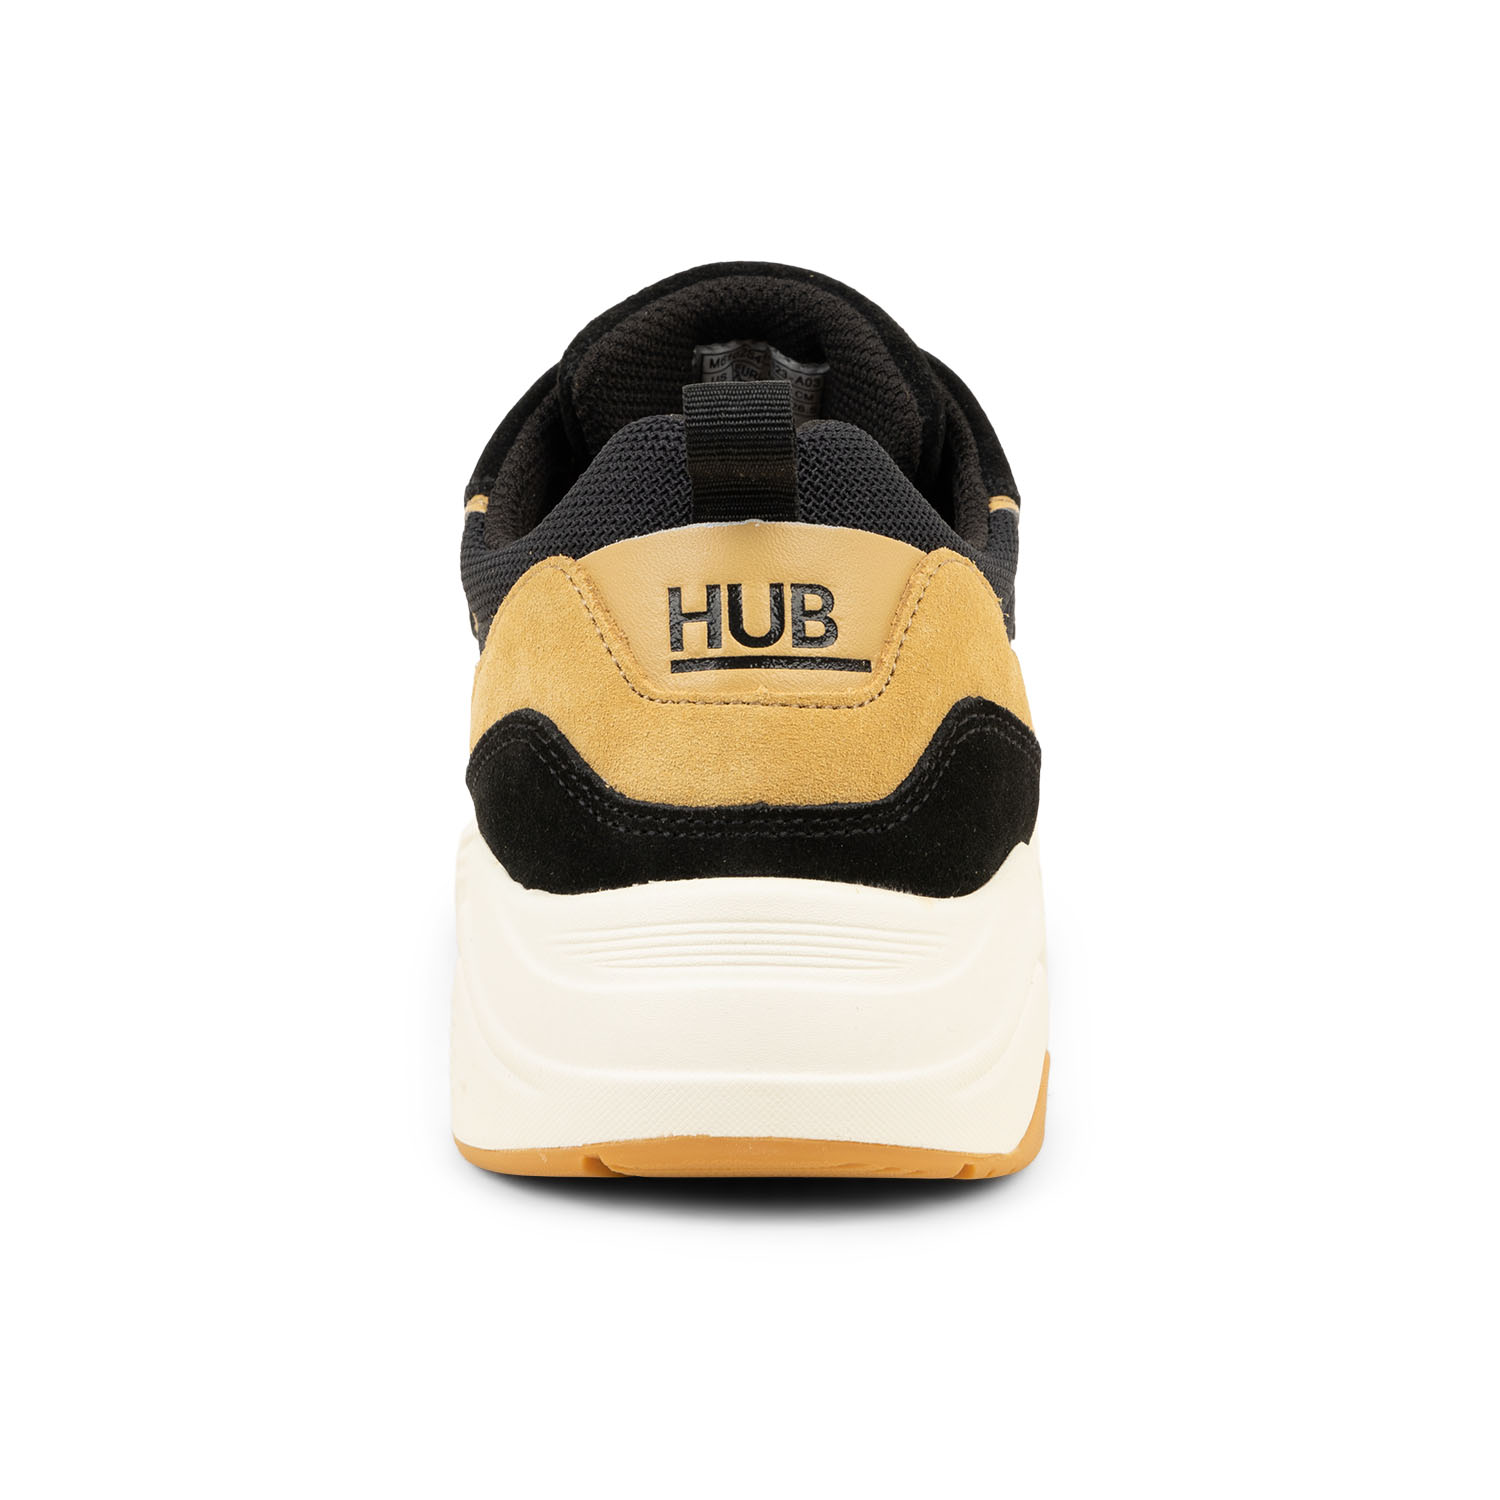 03 - GLIDE - HUB - Baskets - Nubuck